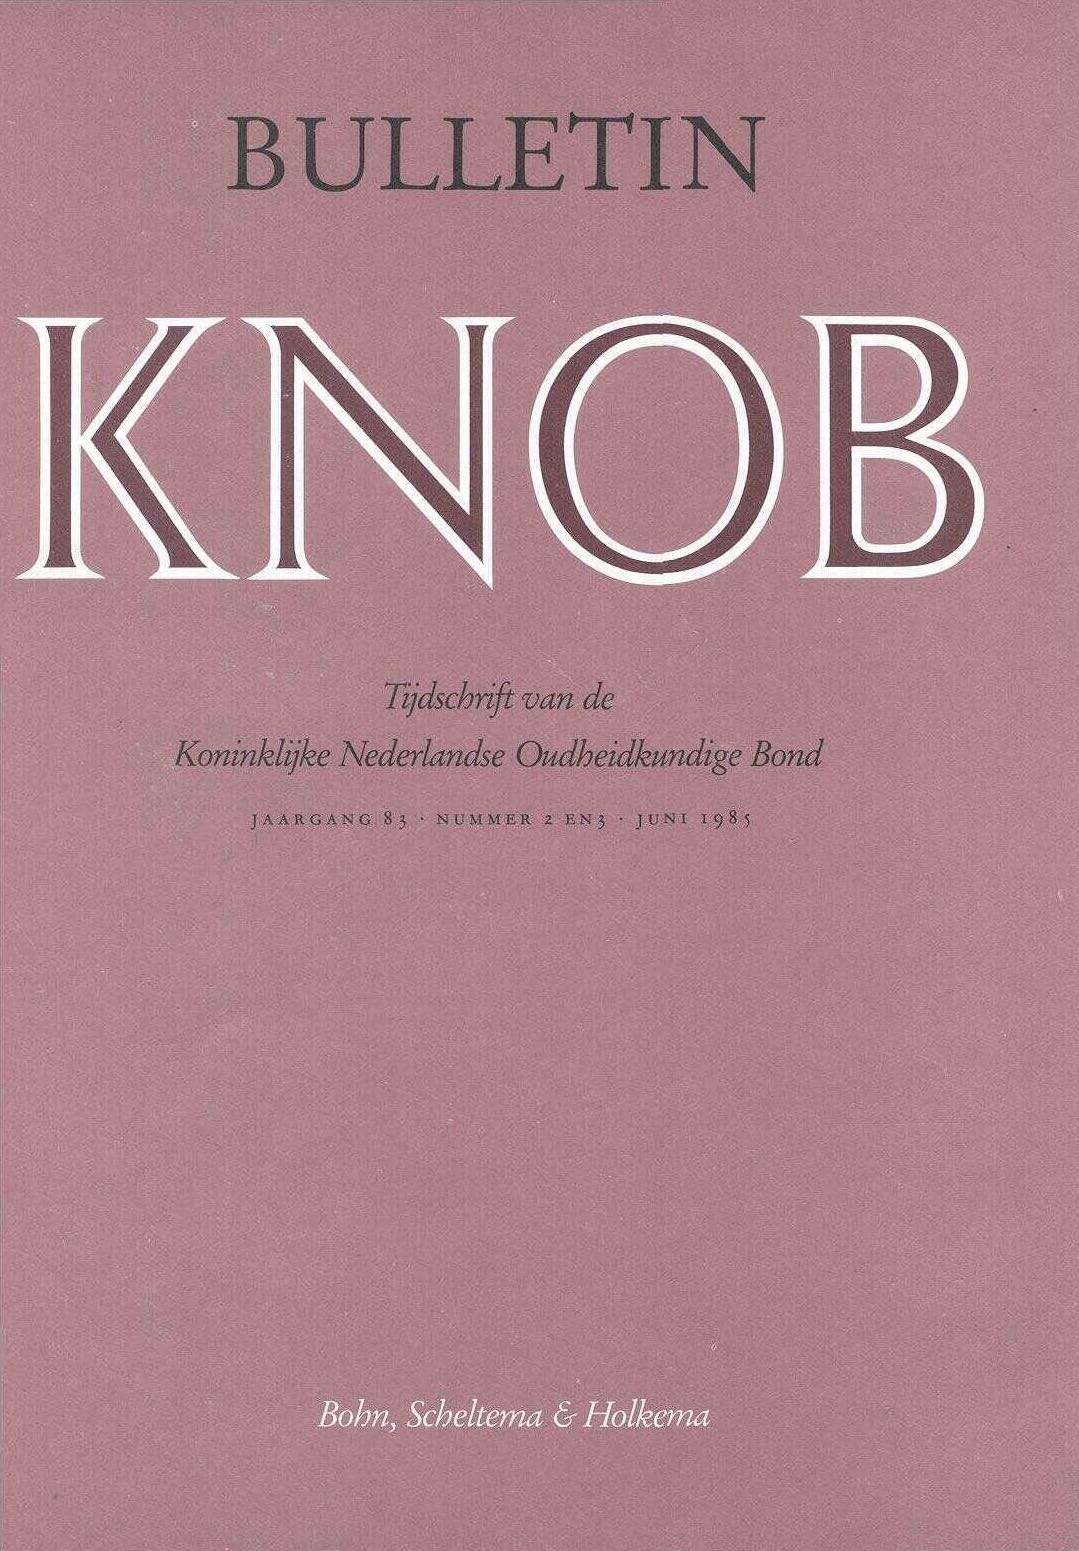 						Toon Bulletin KNOB 84 (1985) 2-3
					